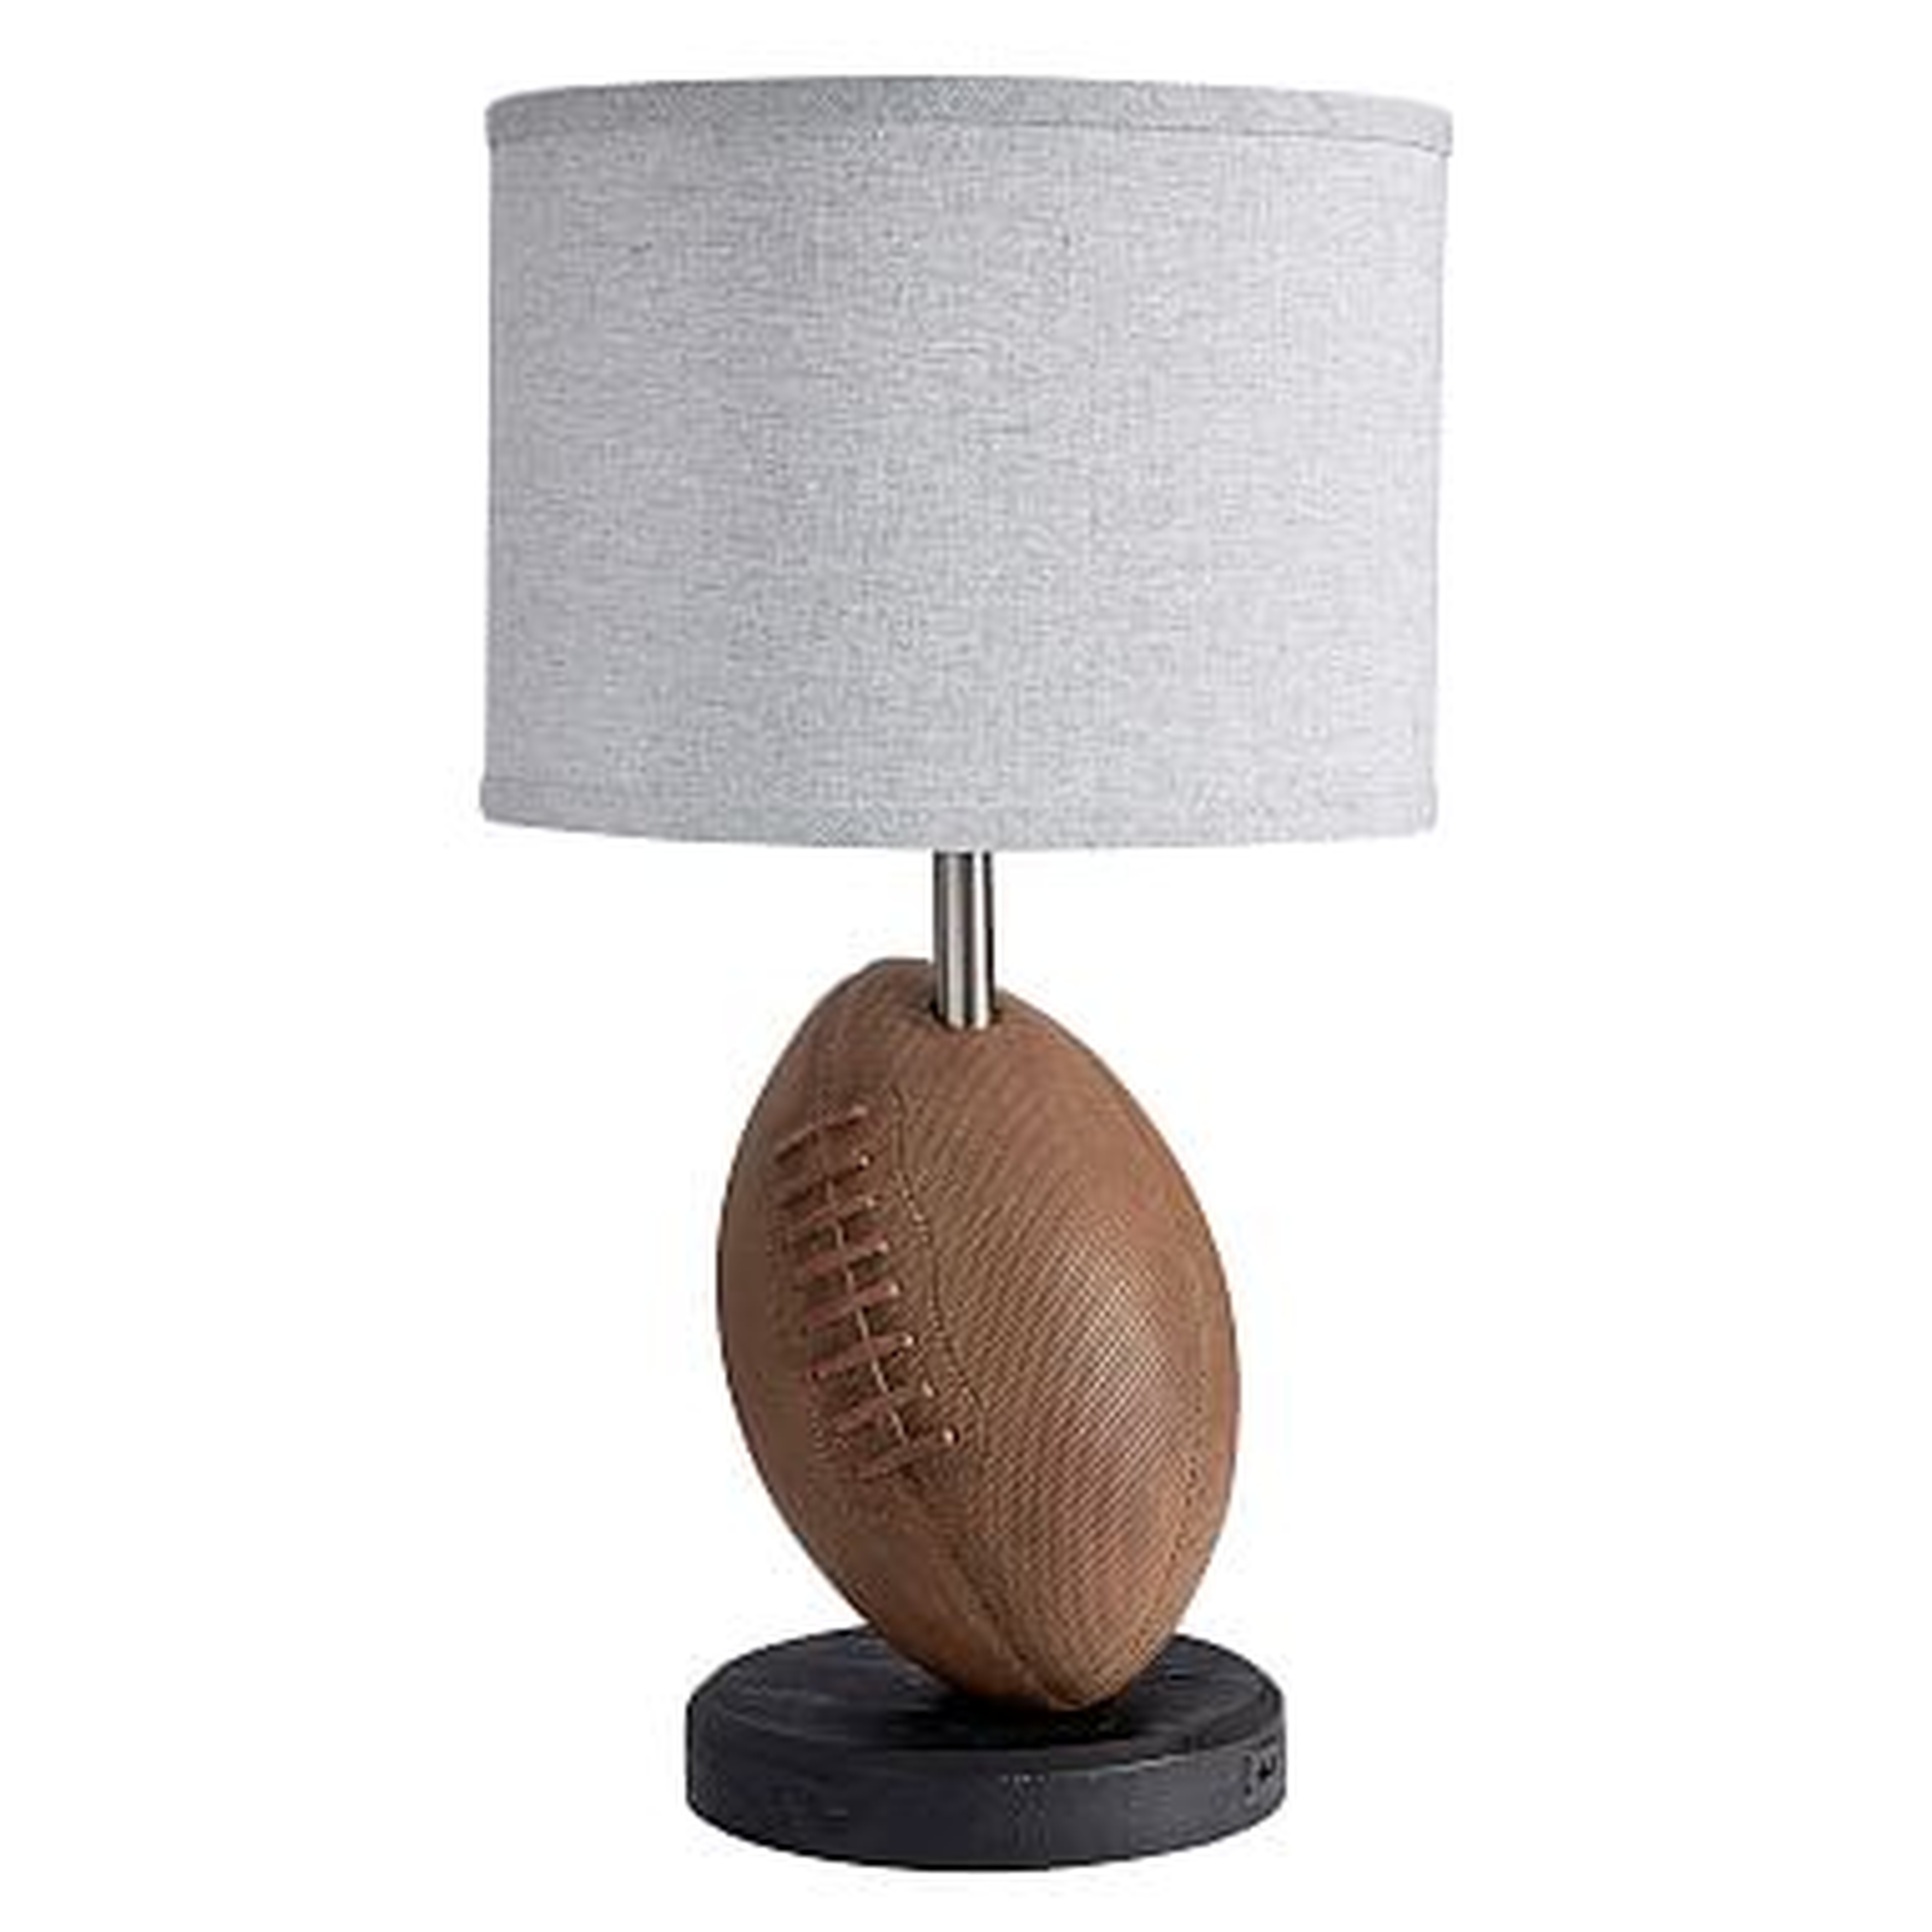 Football Table Lamp with USB, Brown - Pottery Barn Teen